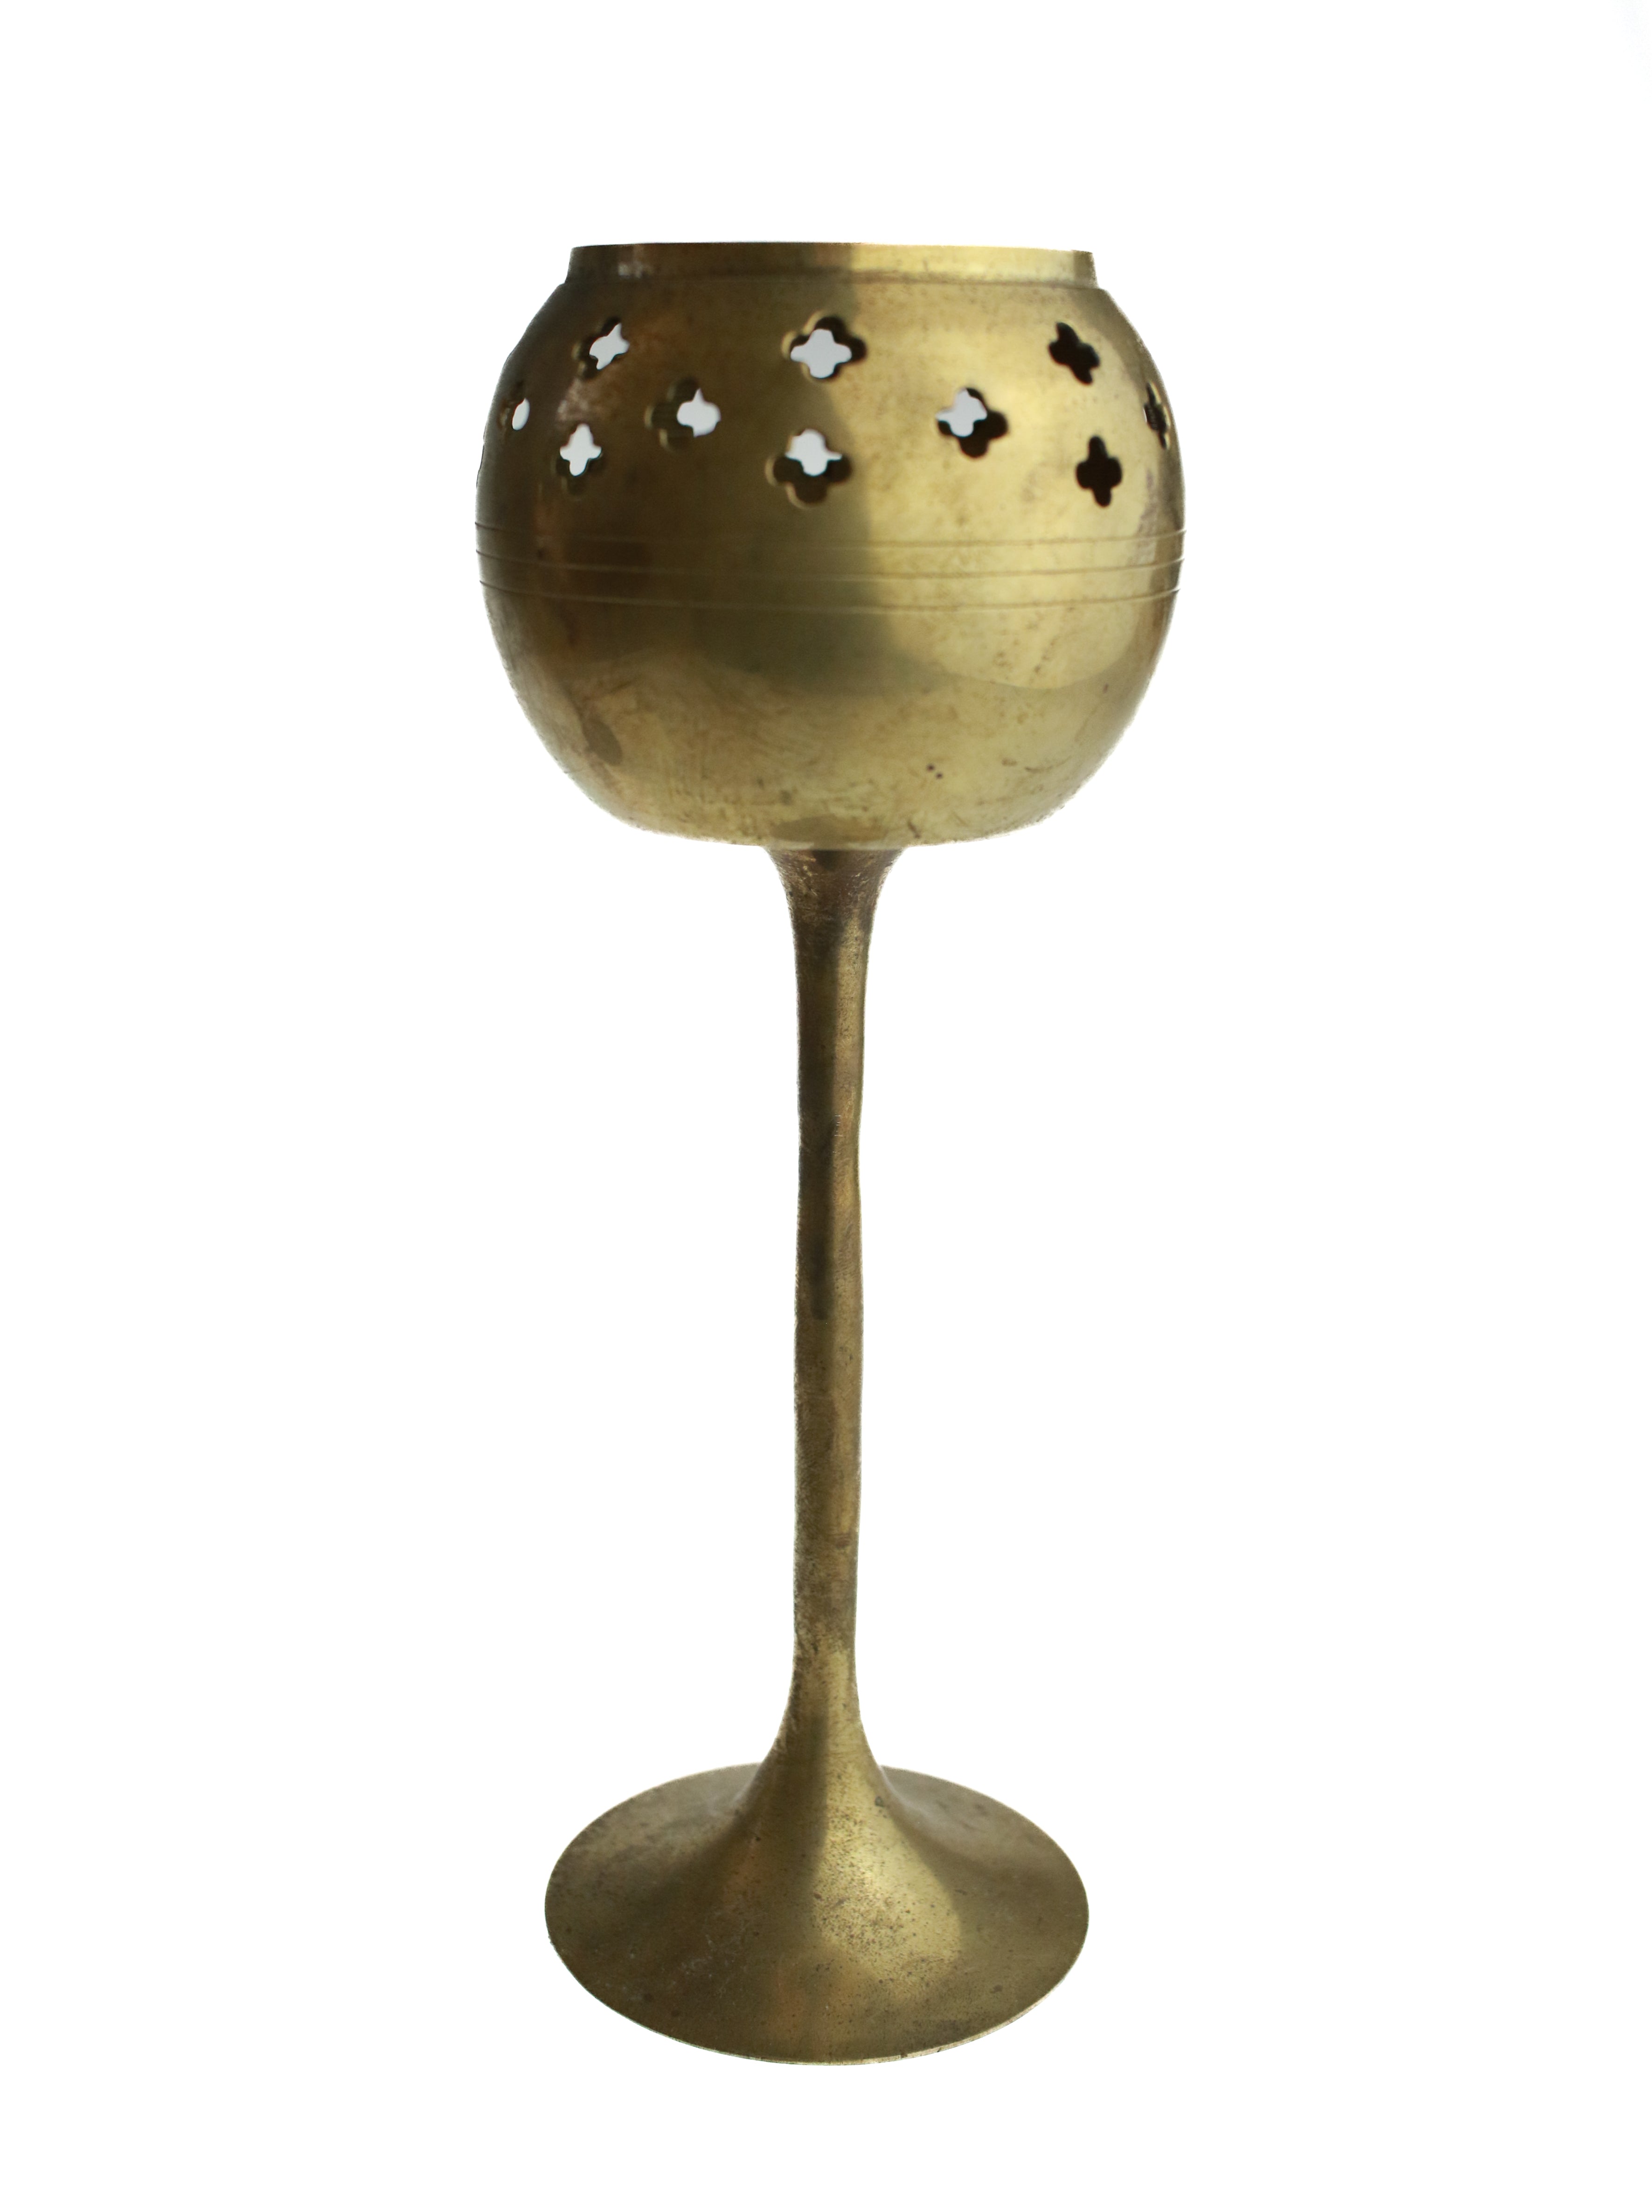 Brass Starlight Pedestal Votives (Set of 2)